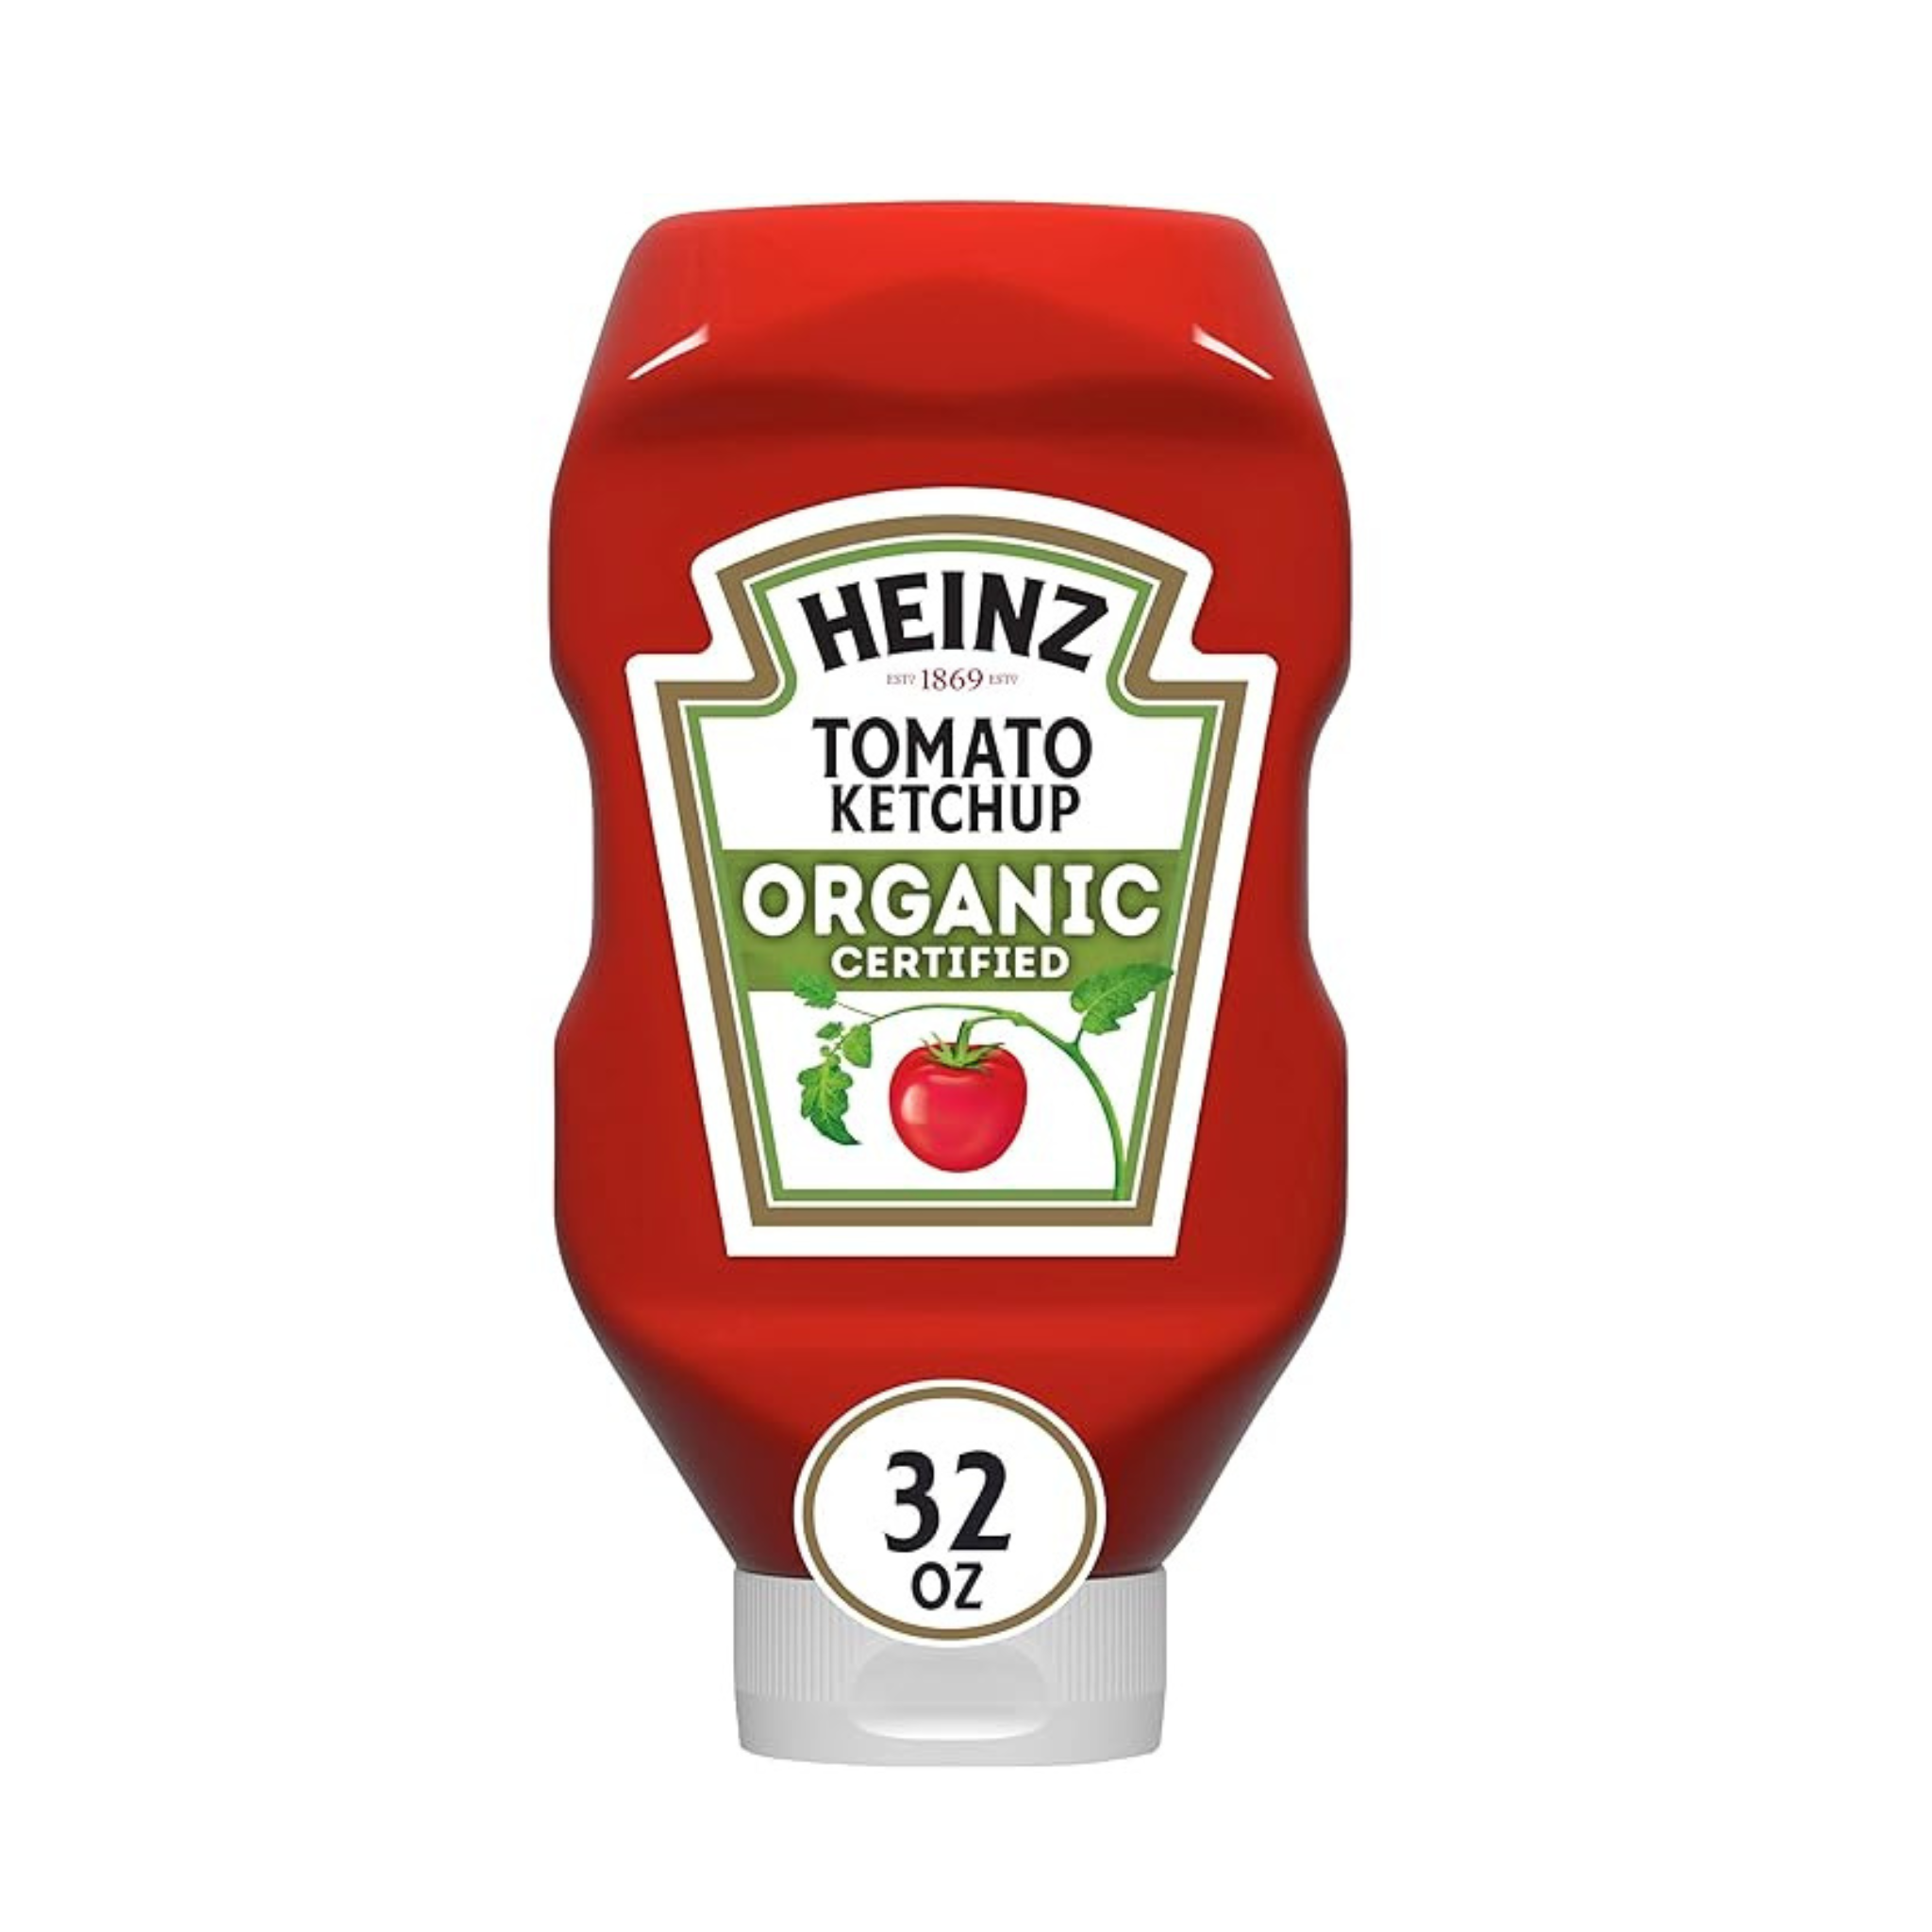 Heinz Tomato Ketchup Bottle 14oz Or 32oz